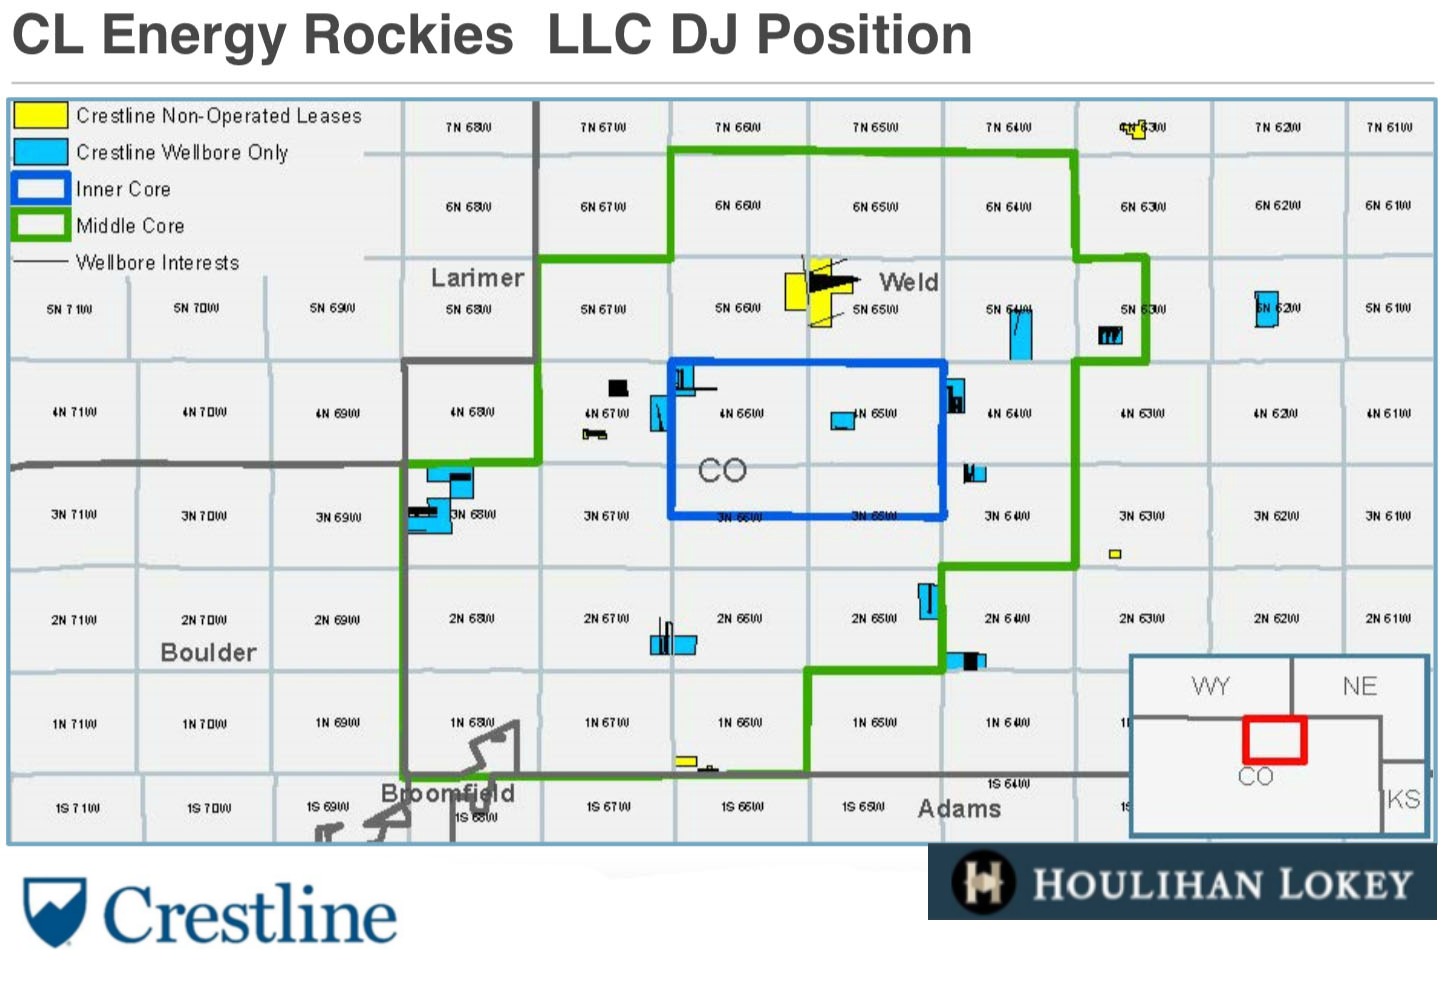 CL Energy Rockies D-J Position Map (Source: Houlihan Lokey Capital Inc.)